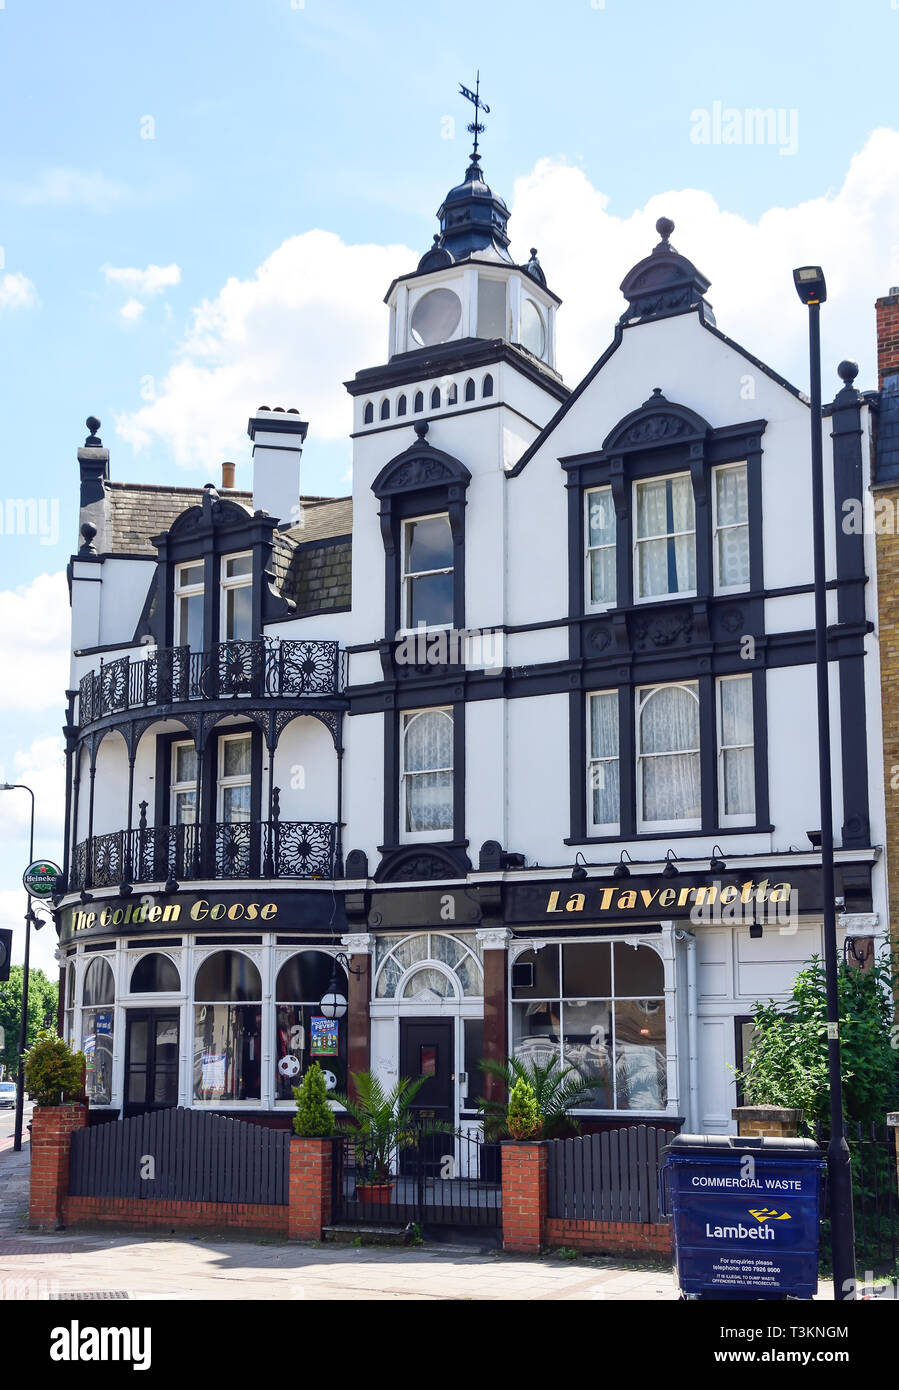 The Golden Goose Pub, Camberwell New Camberwell, London Borough of Southwark, Greater London, England, United Kingdom Stock Photo - Alamy